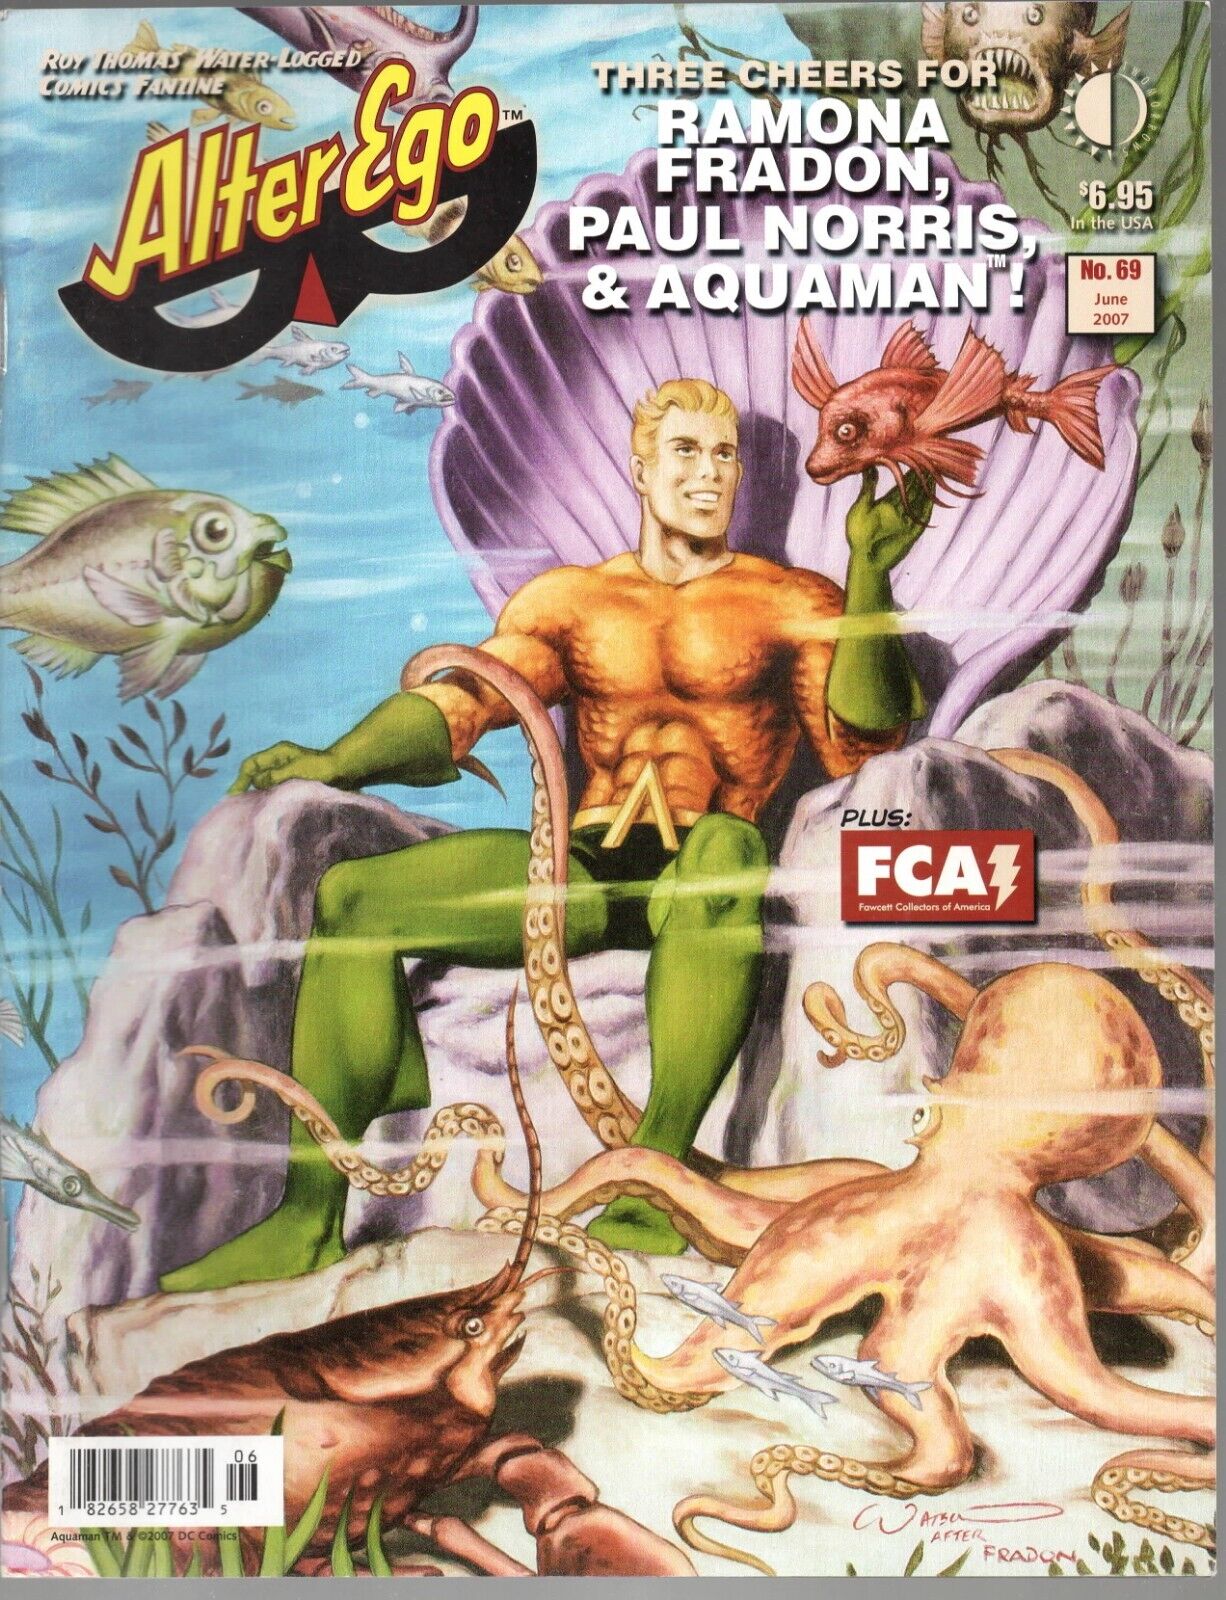 Alter Ego #69 Ramona Fradon Paul Norris 2007 Aquamon Comics History fanzine